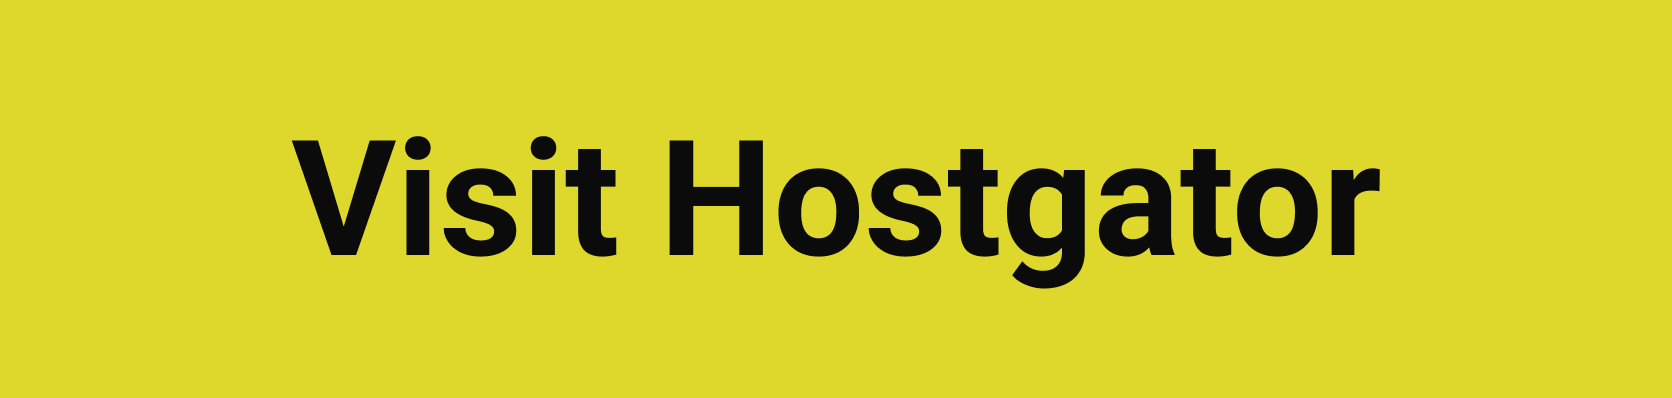 hostgator hosting - vigocart